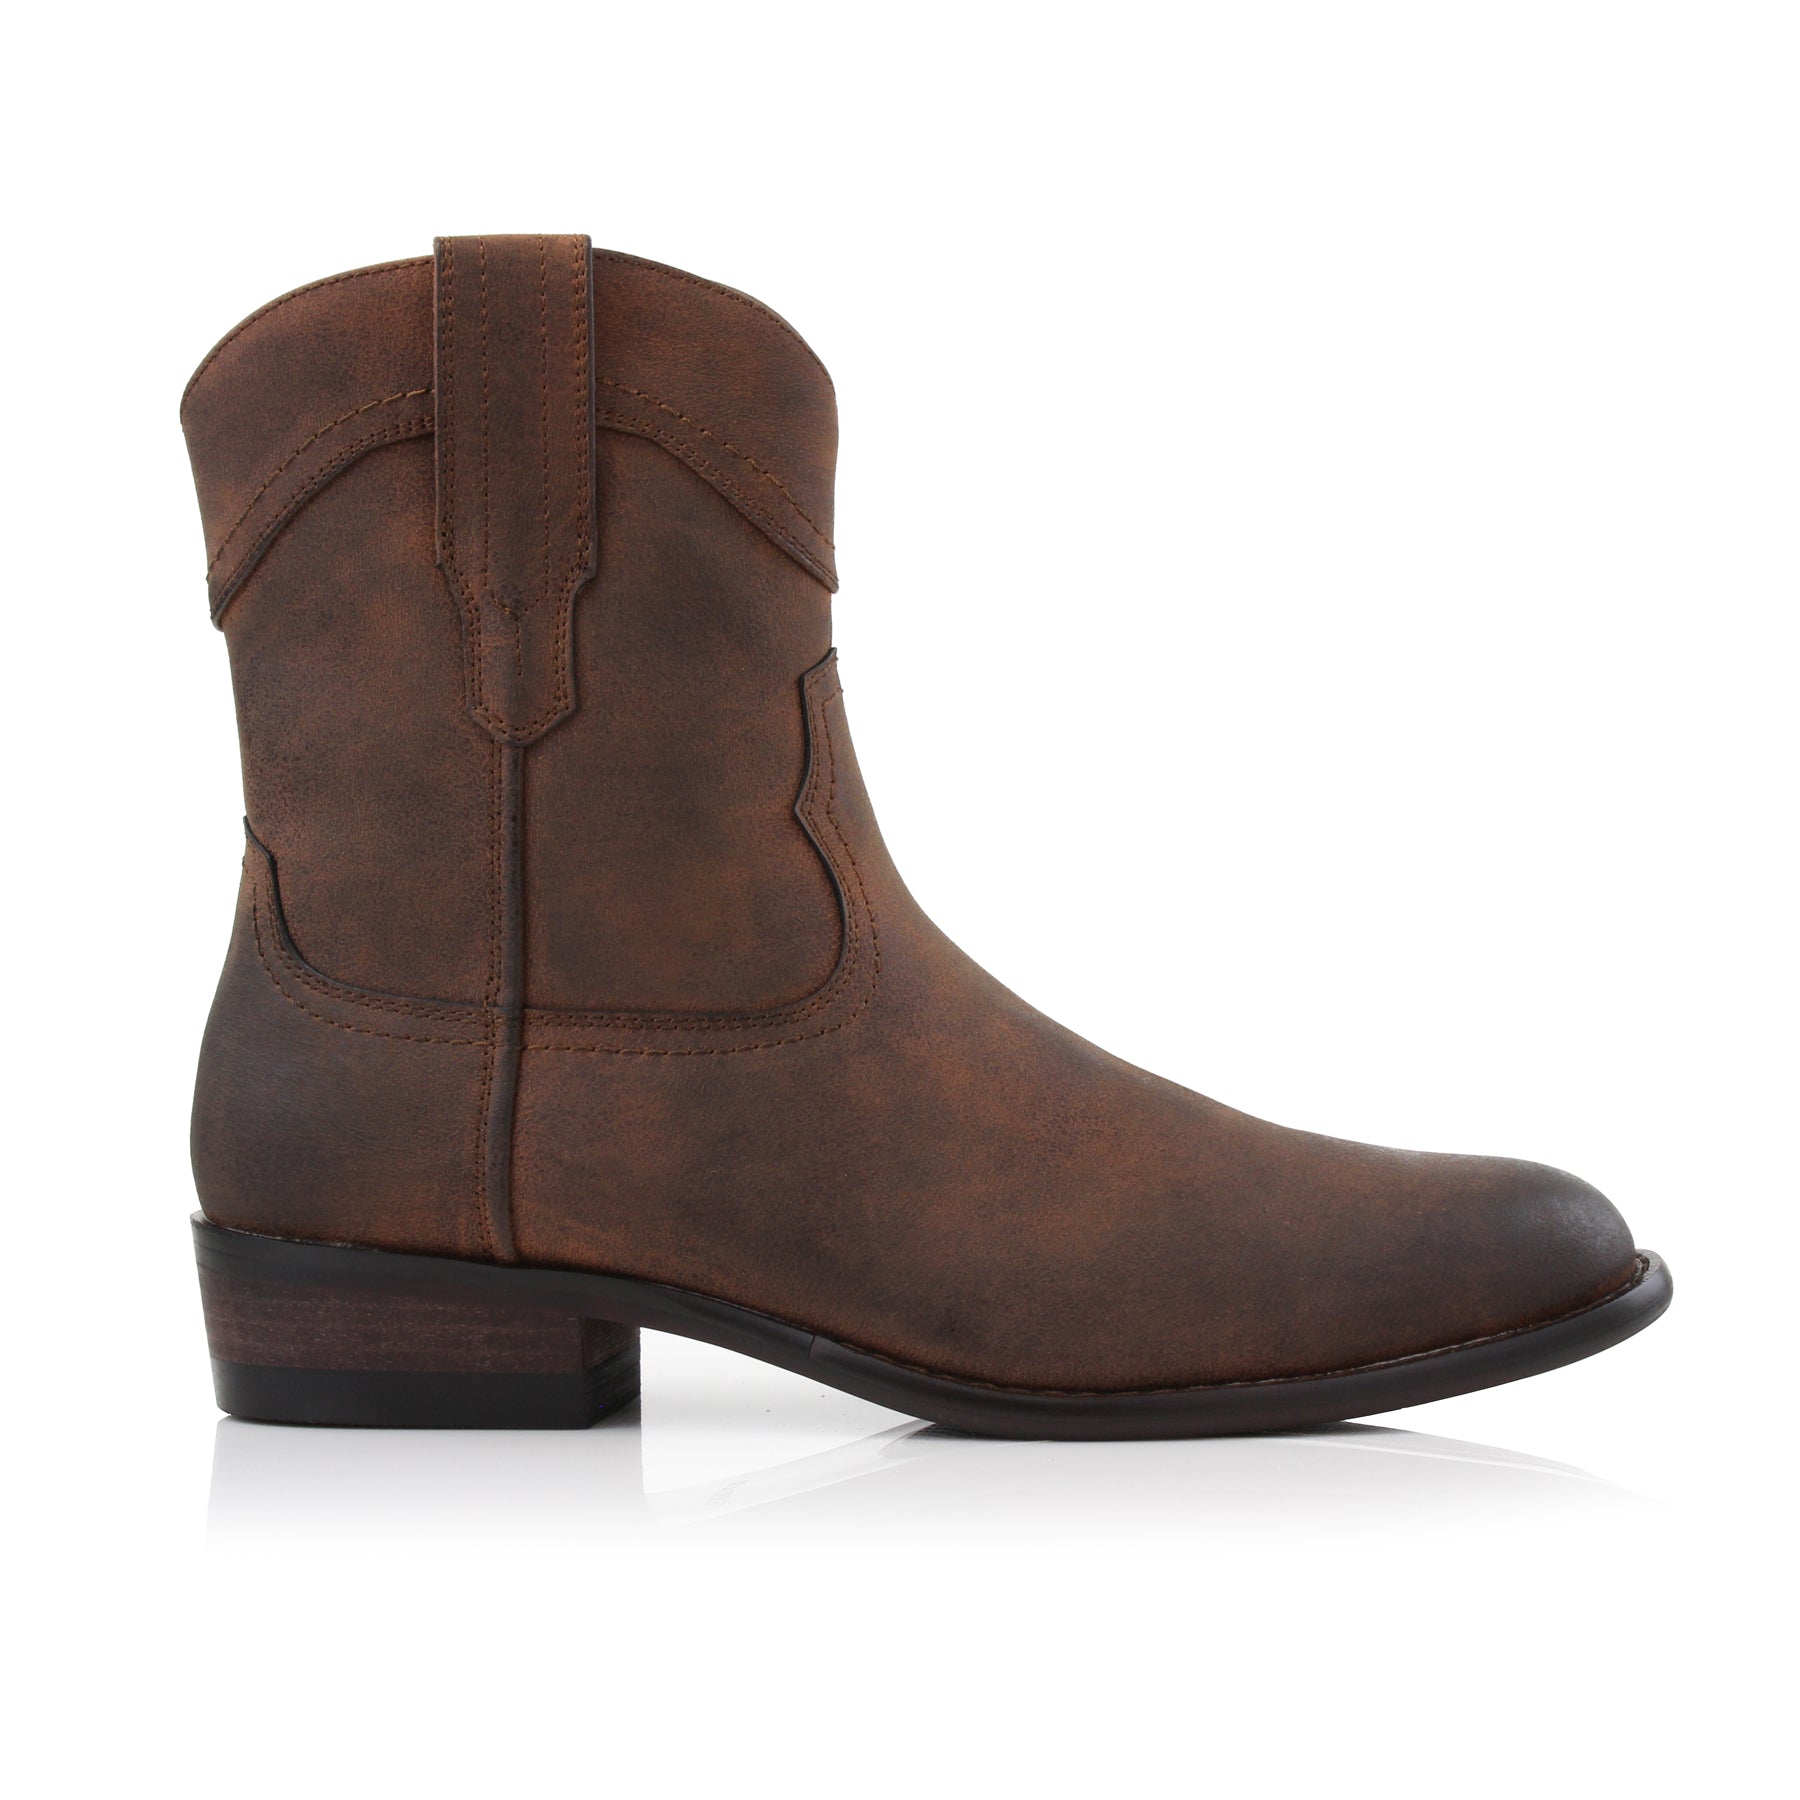 Men's Western Boots | Austin by Ferro Aldo | Conal Footwear | Outer Side Angle View